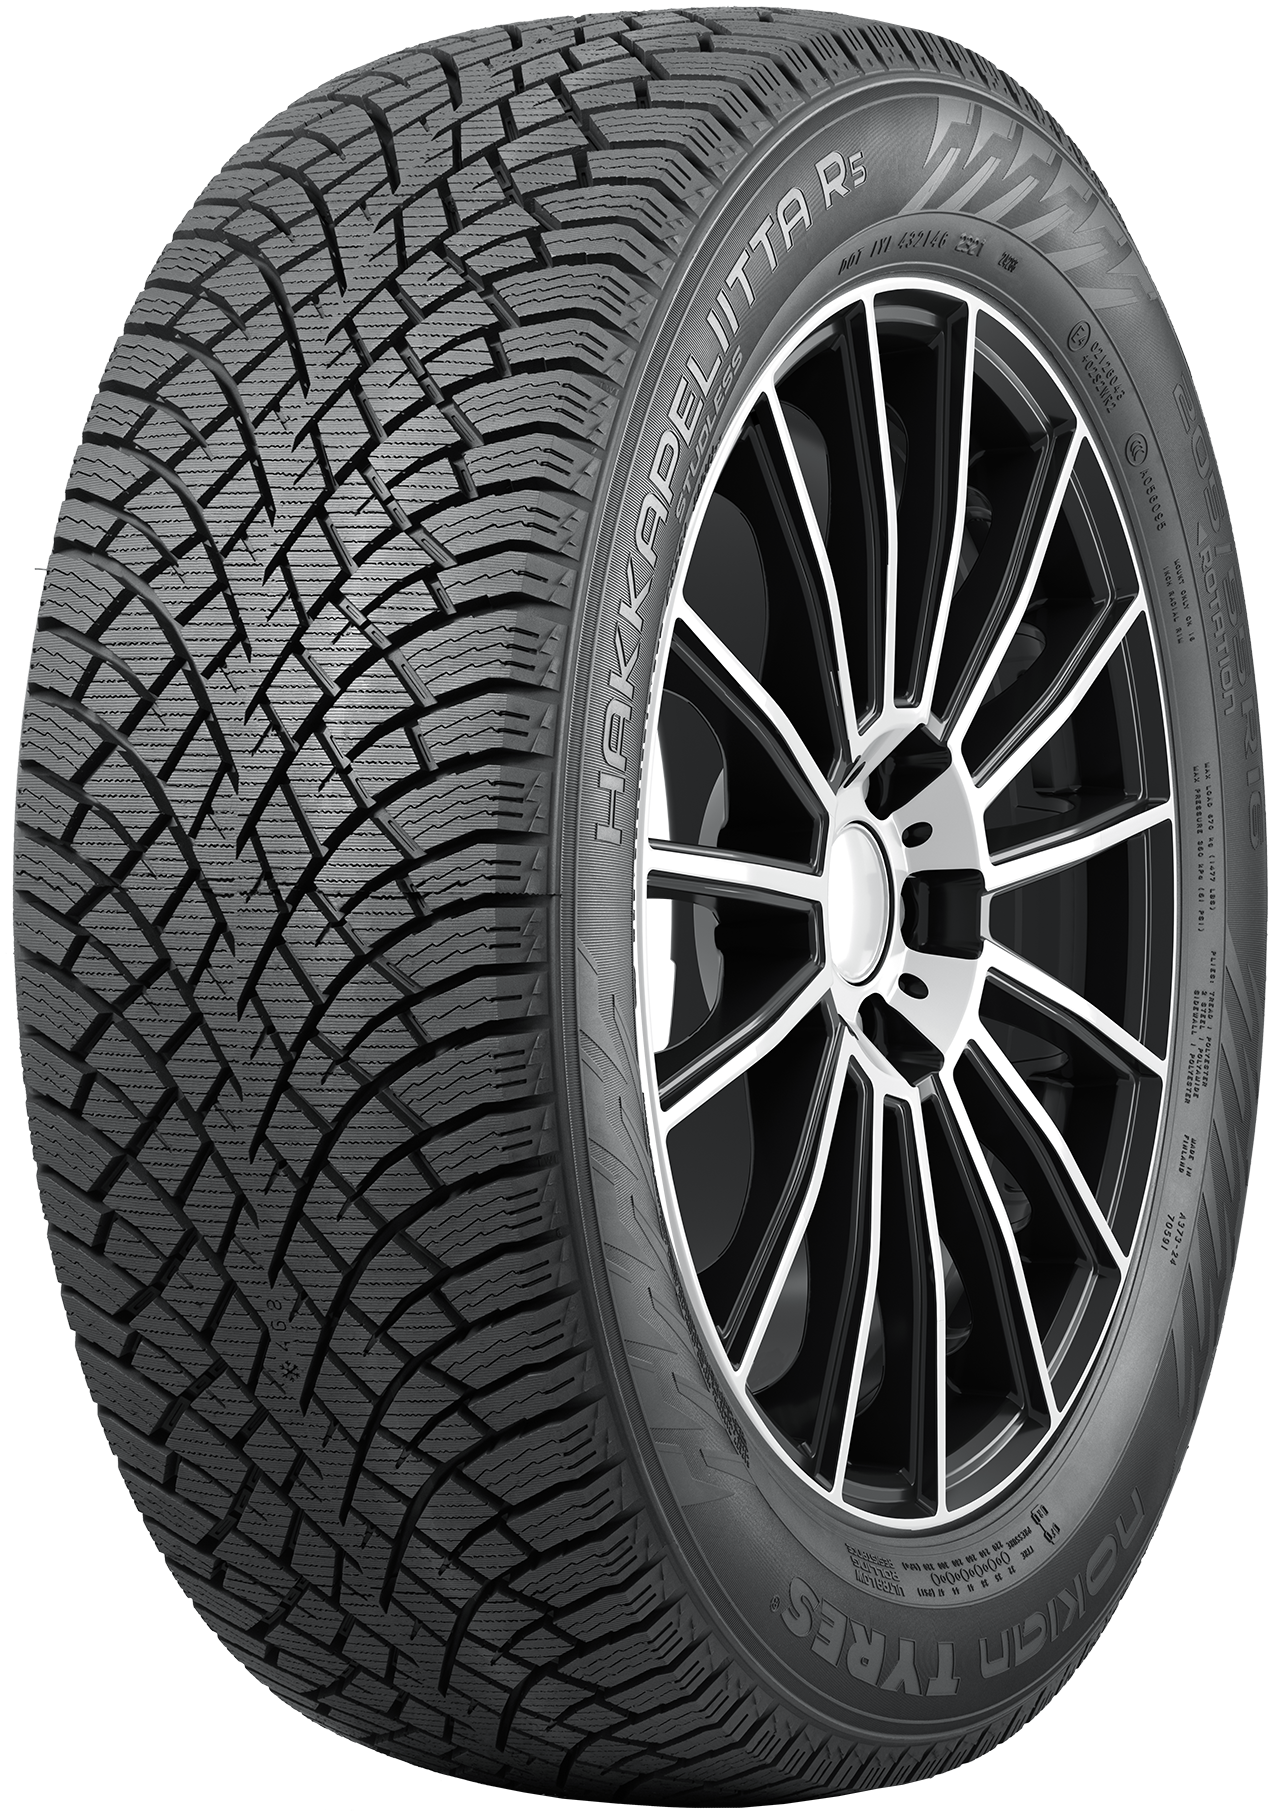 Nokian Hakkapeliitta R5 tires - Reviews and prices | TyresAddict